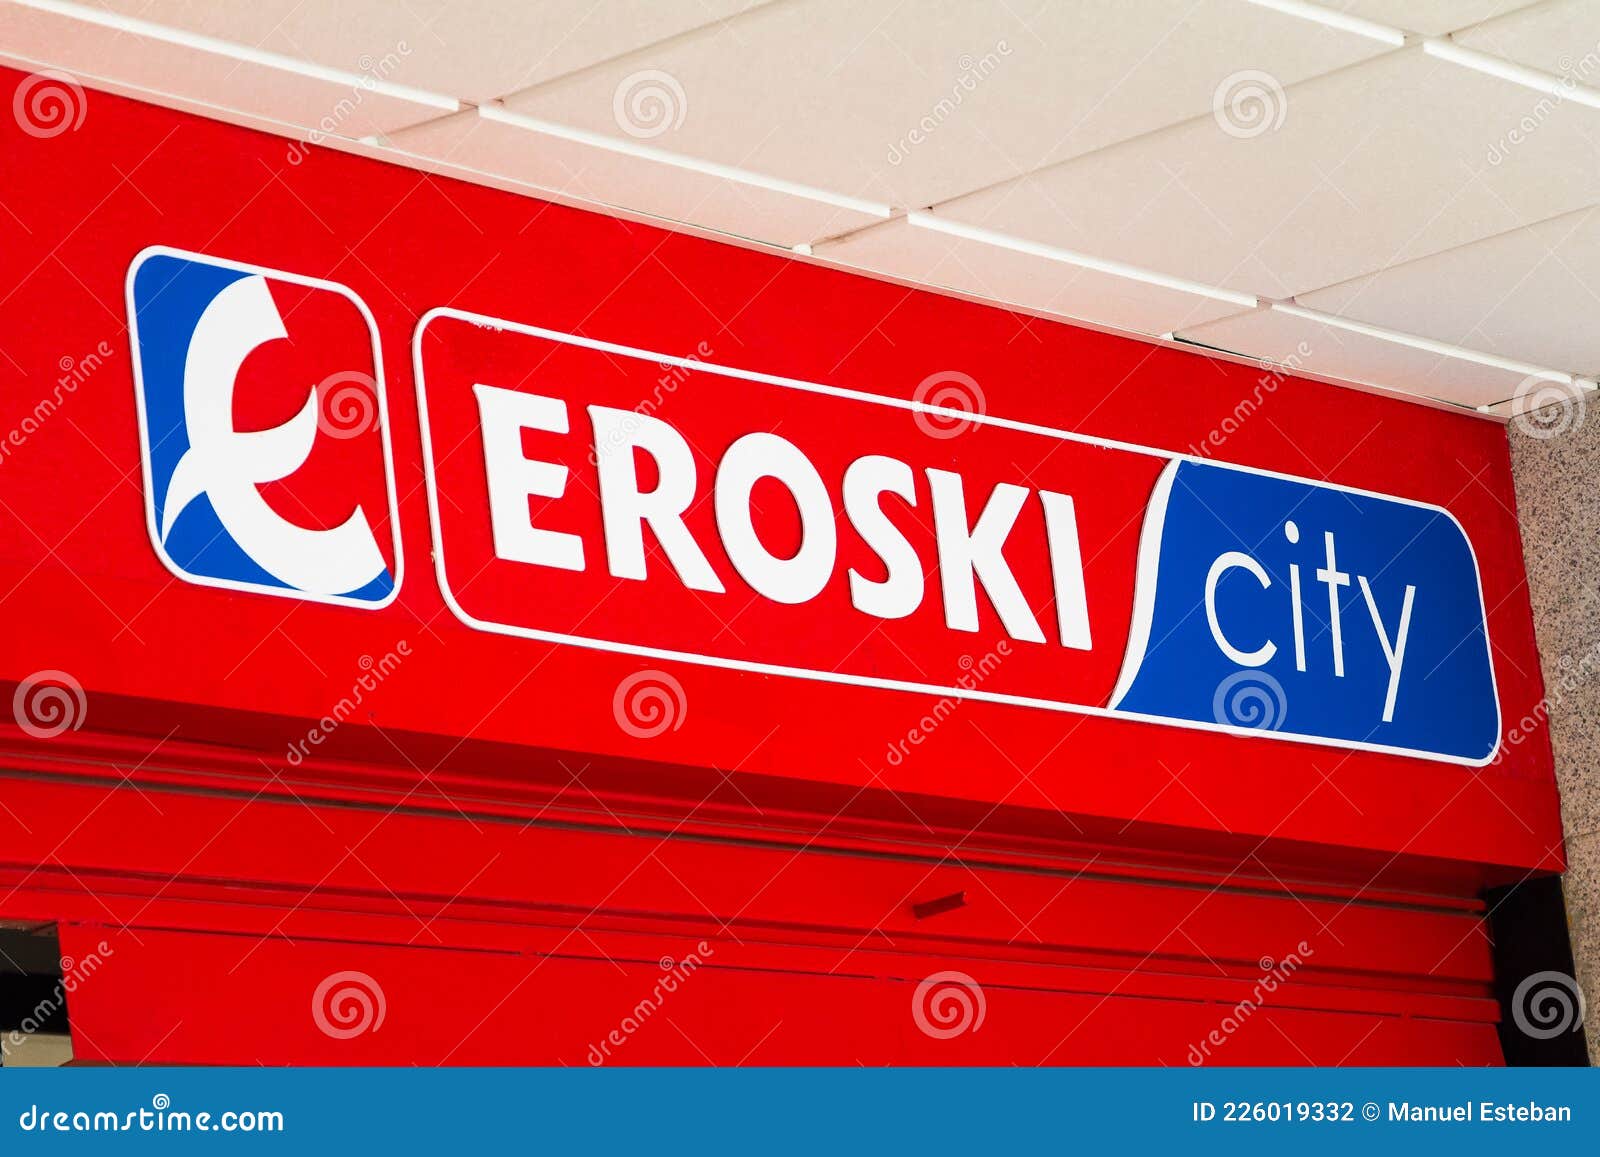 Eroski City Logo on Eroski City Supermarket Editorial Photography ...